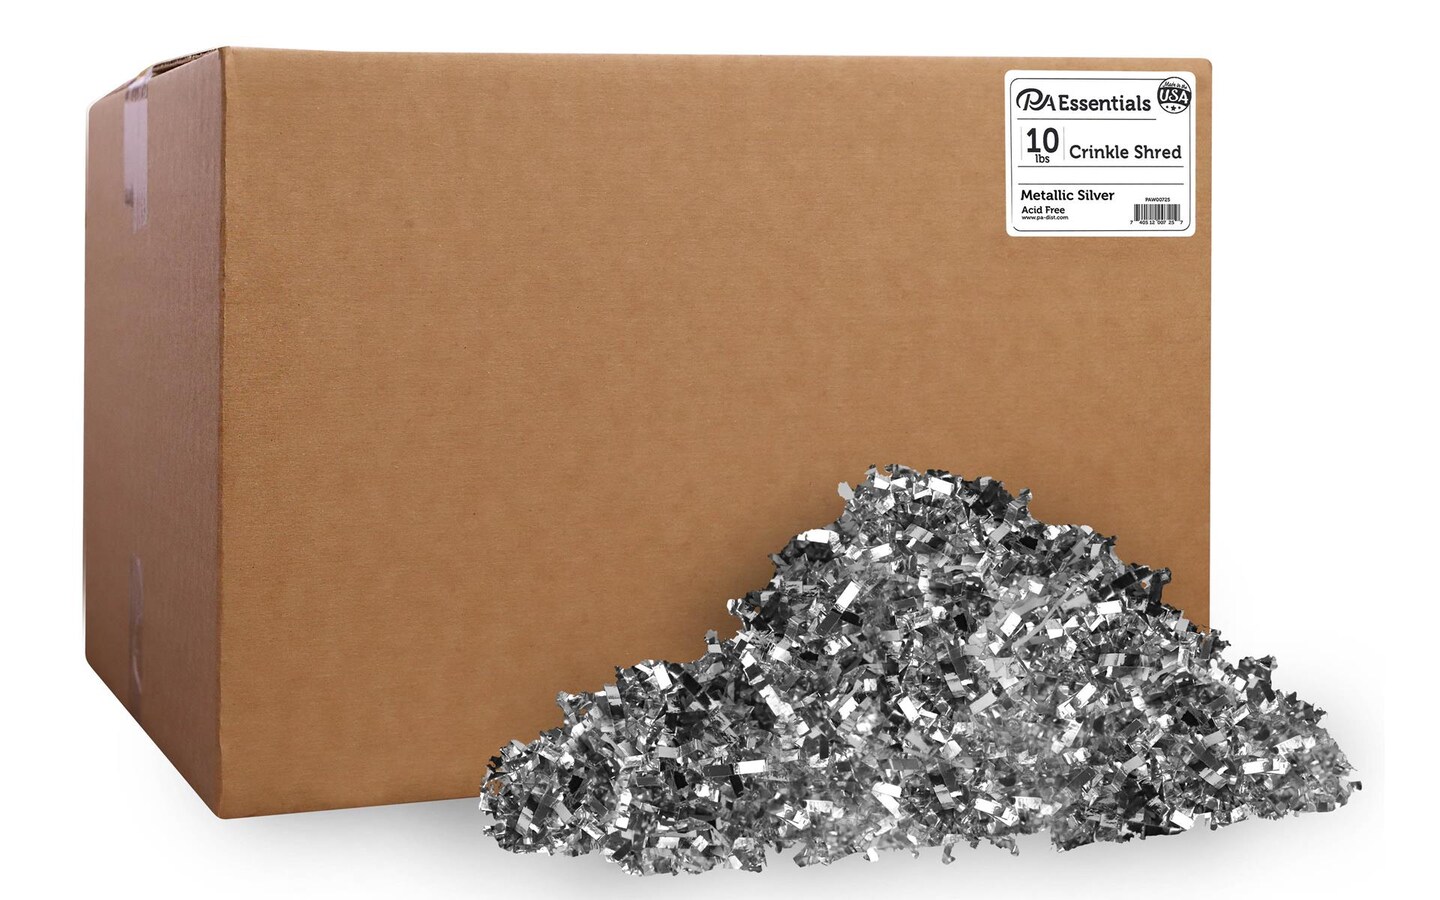 PA Ess Crinkle Shred Box 10lb Metallic Silver